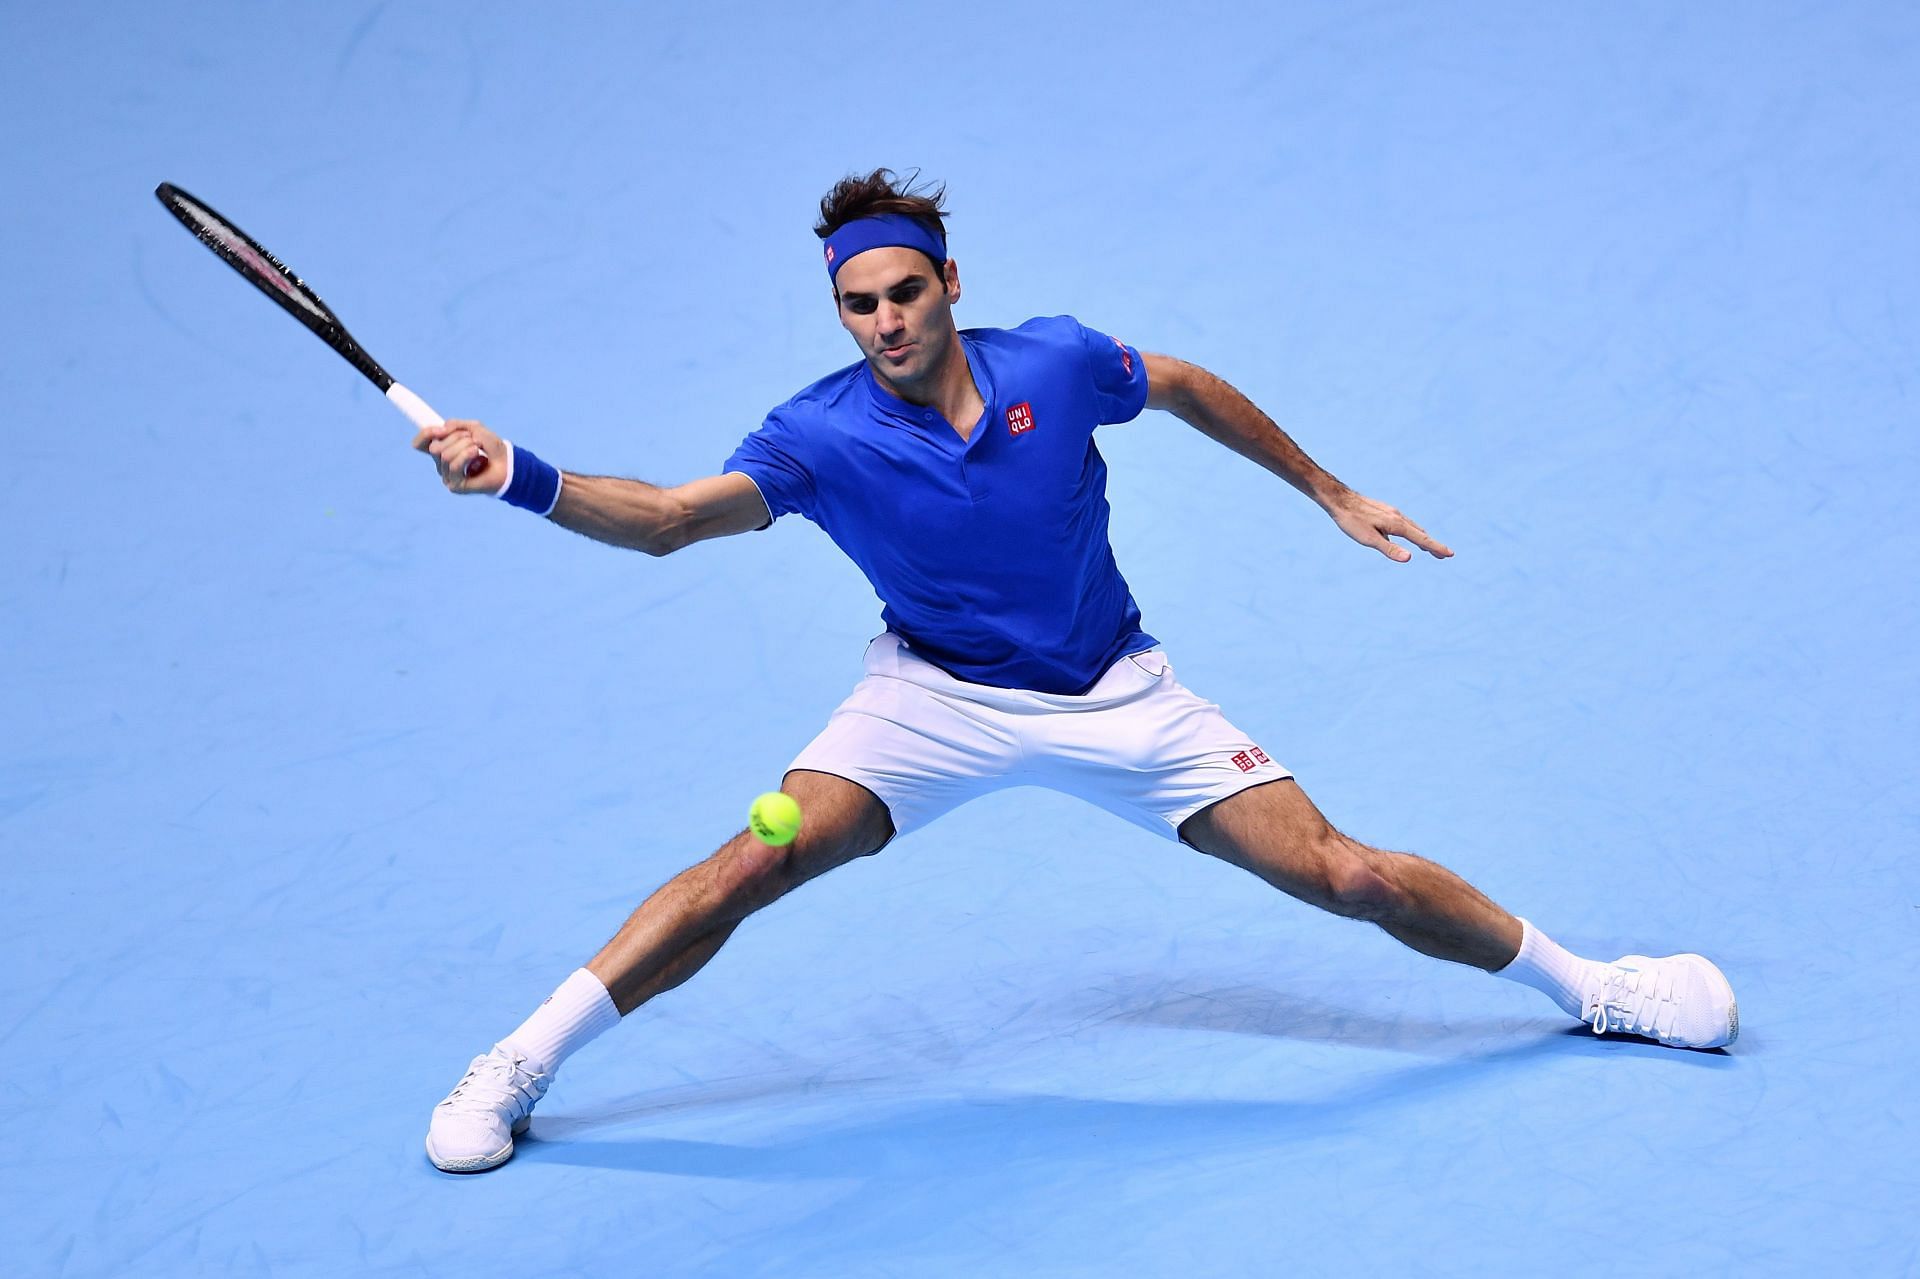 Federer became the oldest World No. 1 at age 36 in 2018